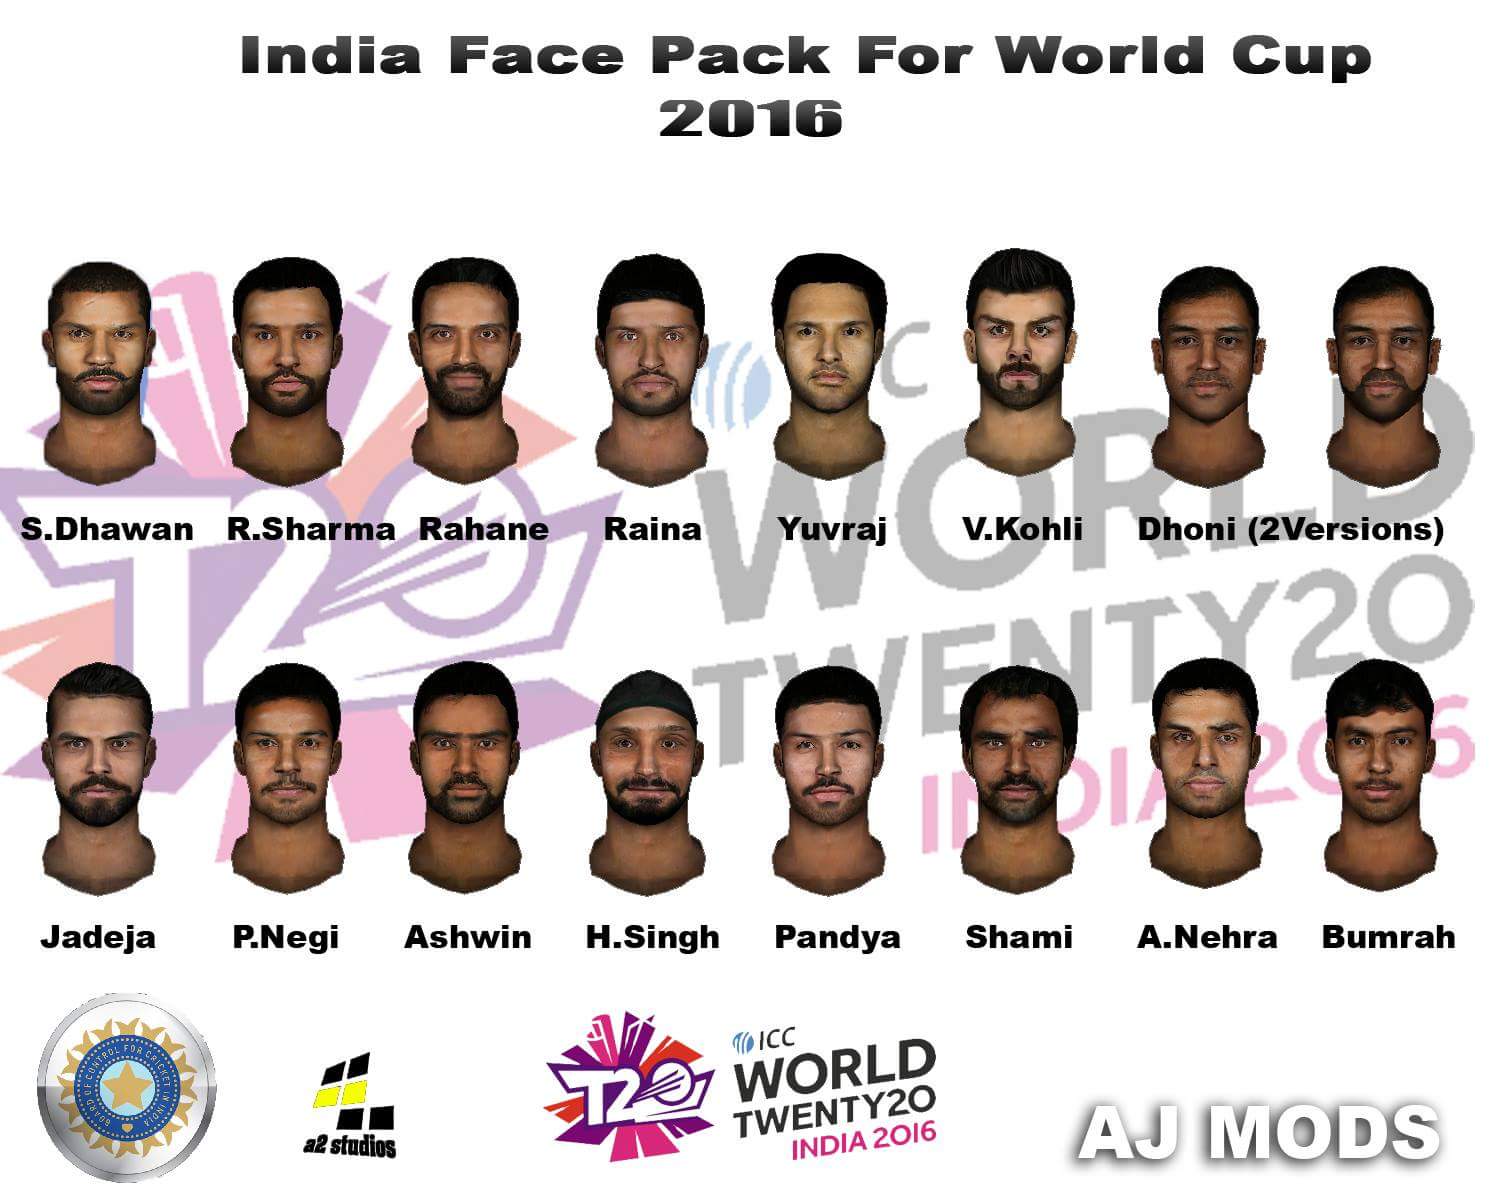 ea sports cricket 11 roster file download